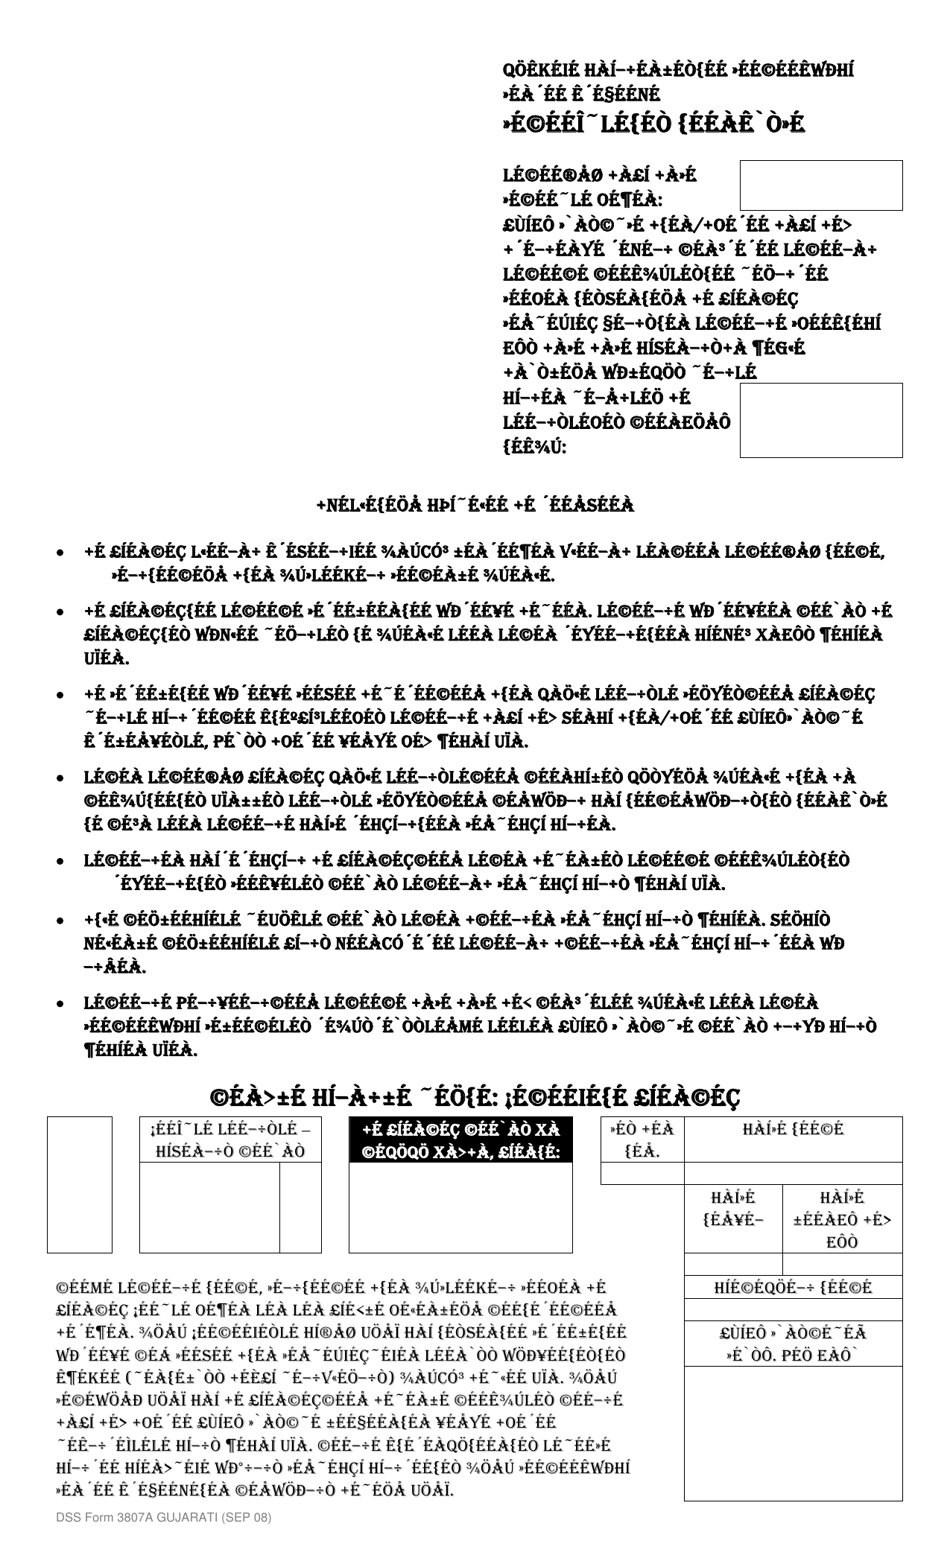 DSS Form 3807A GUR Mailed Recertification Form - South Carolina (Gujarati), Page 1